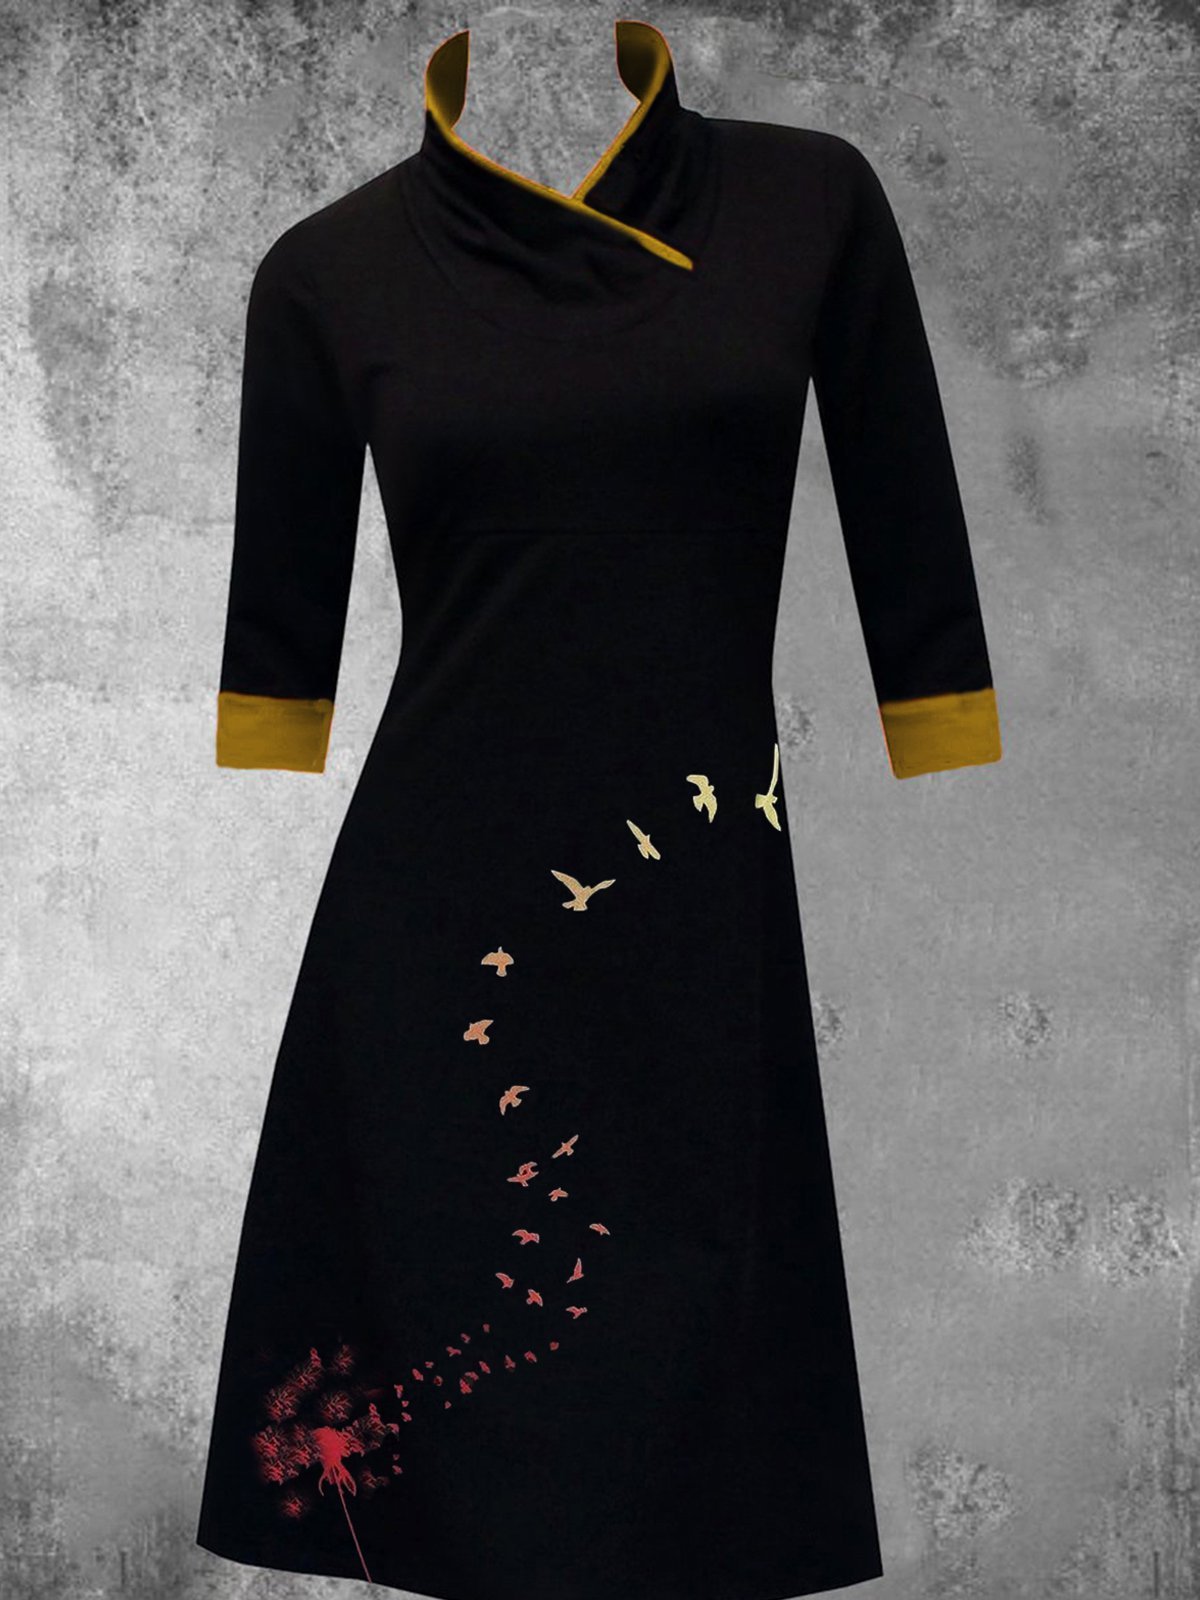 Cotton-Blend Half Sleeve A-Line Casual Knitting Dress